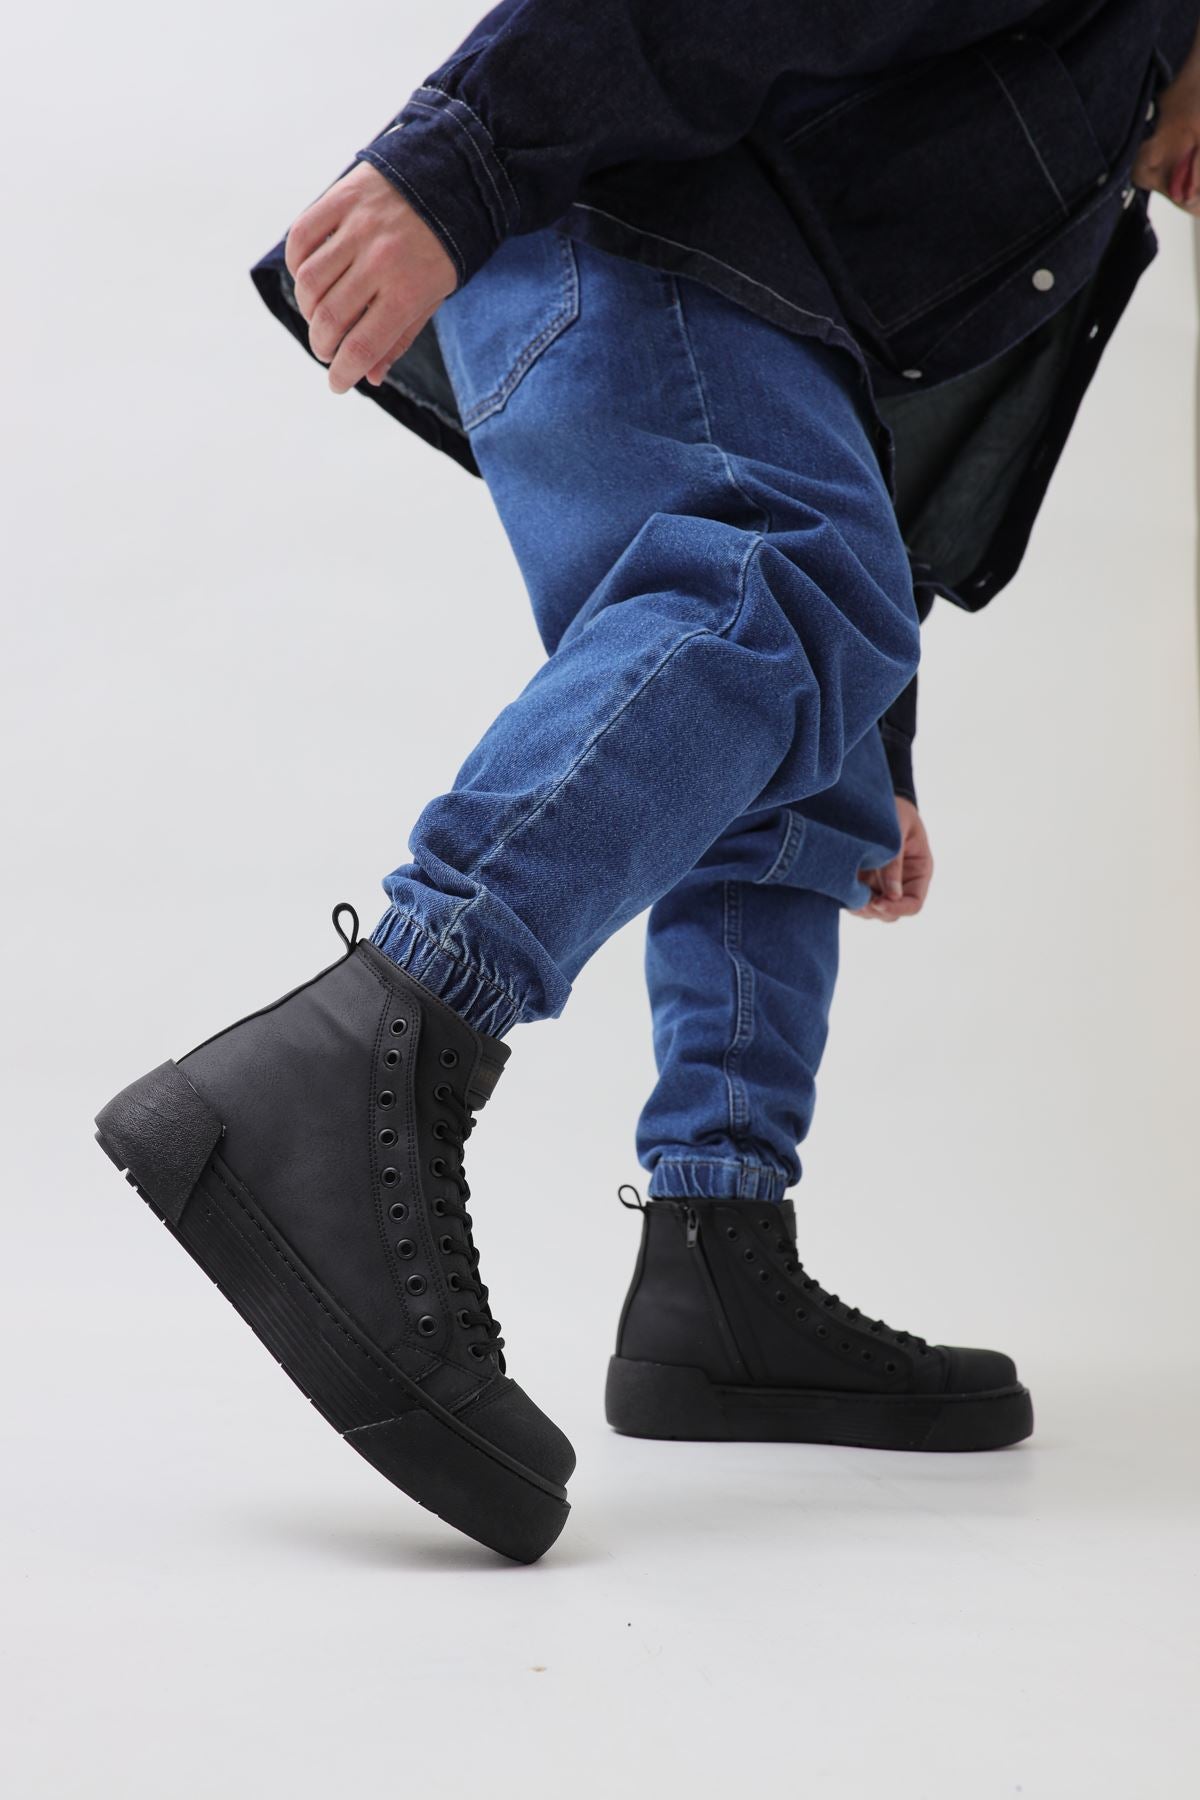 CH167 ST Men's Boots BLACK/BLACK - STREETMODE ™